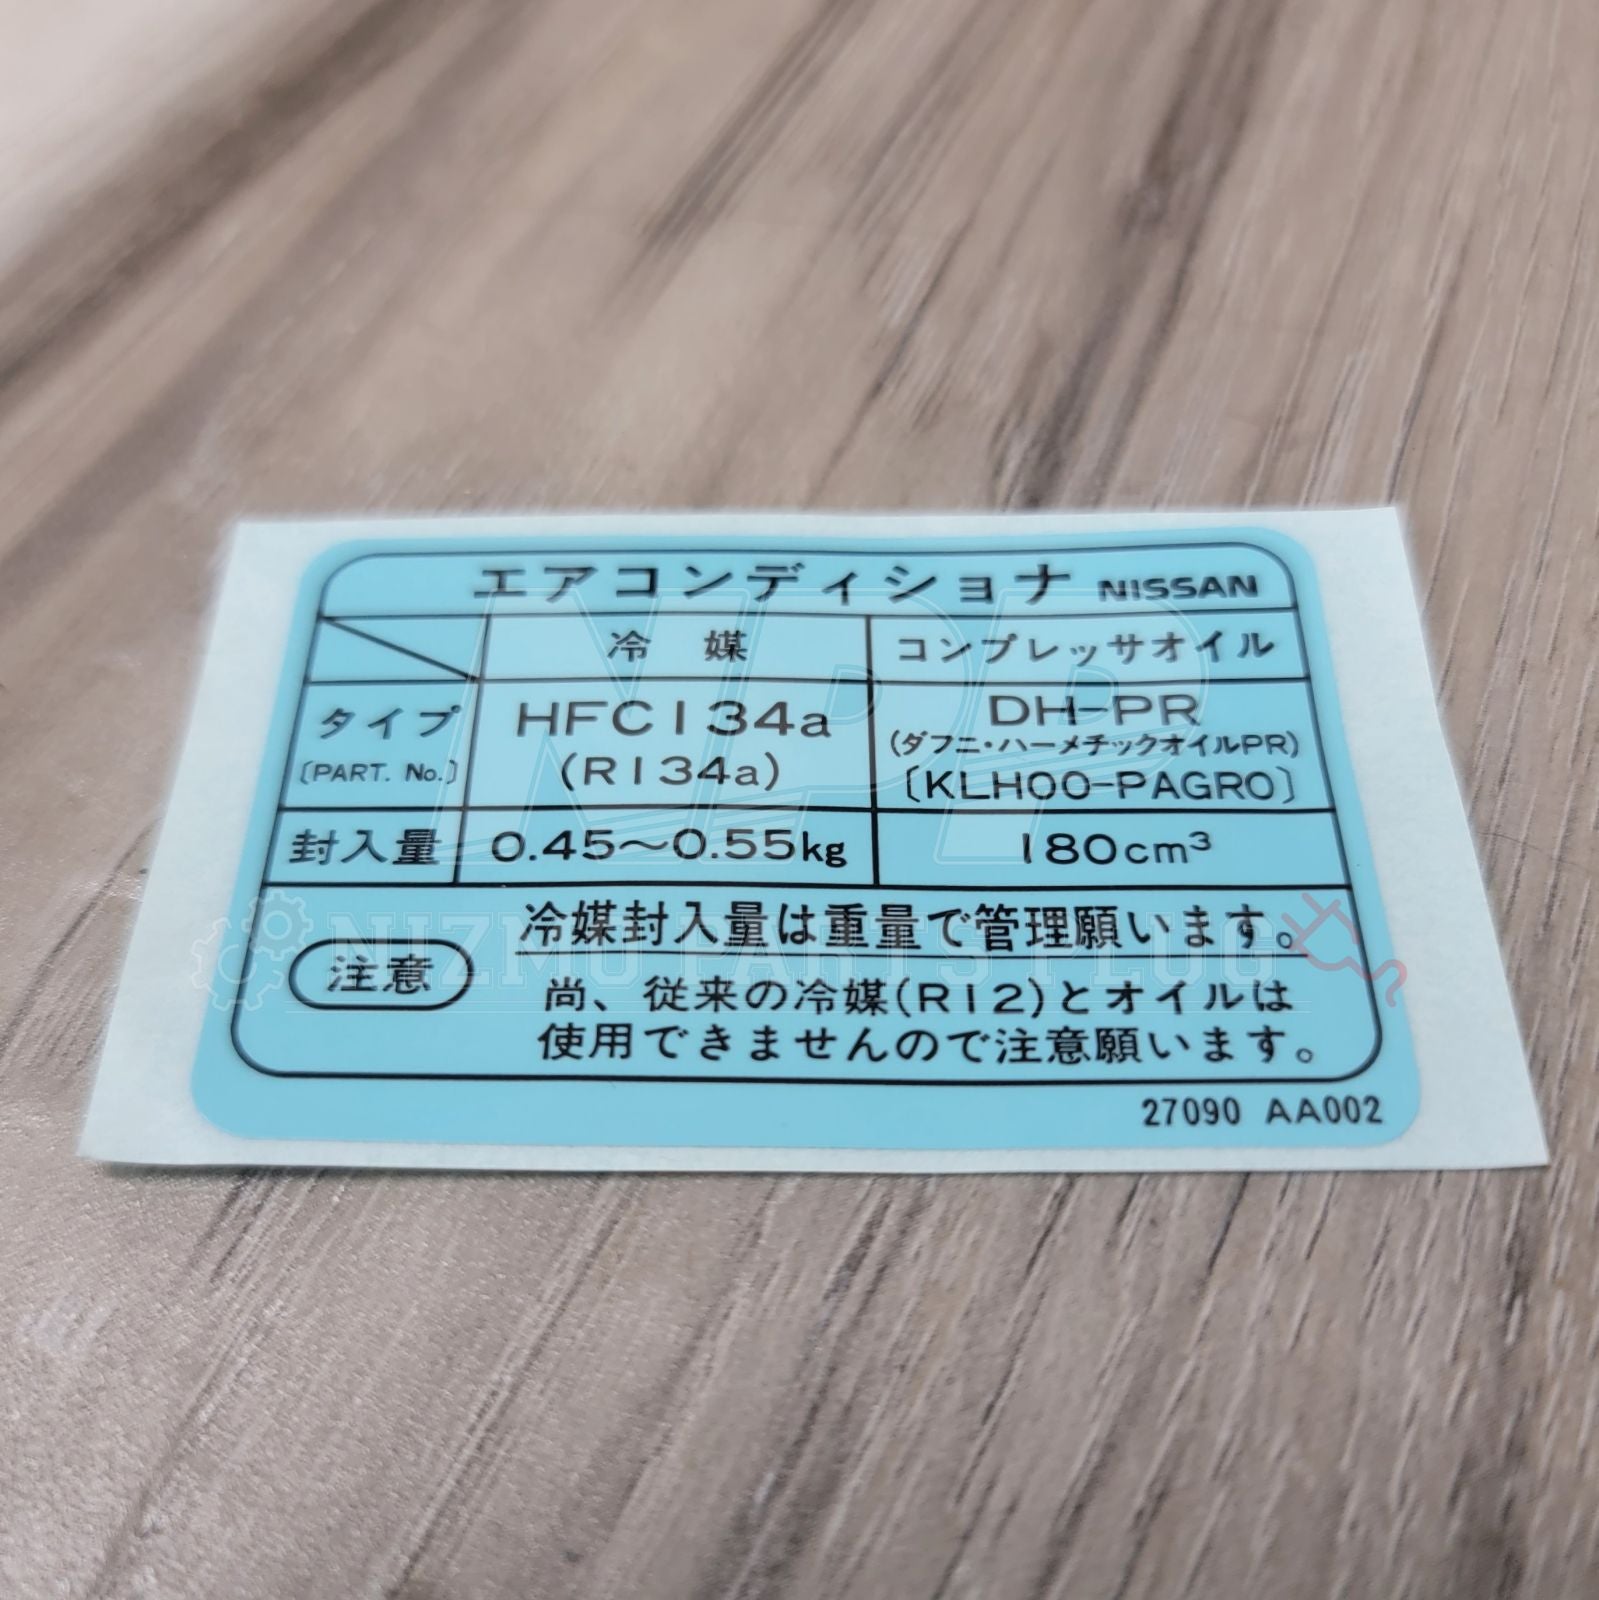 R34 Skyline GTT Air Conditioning Label